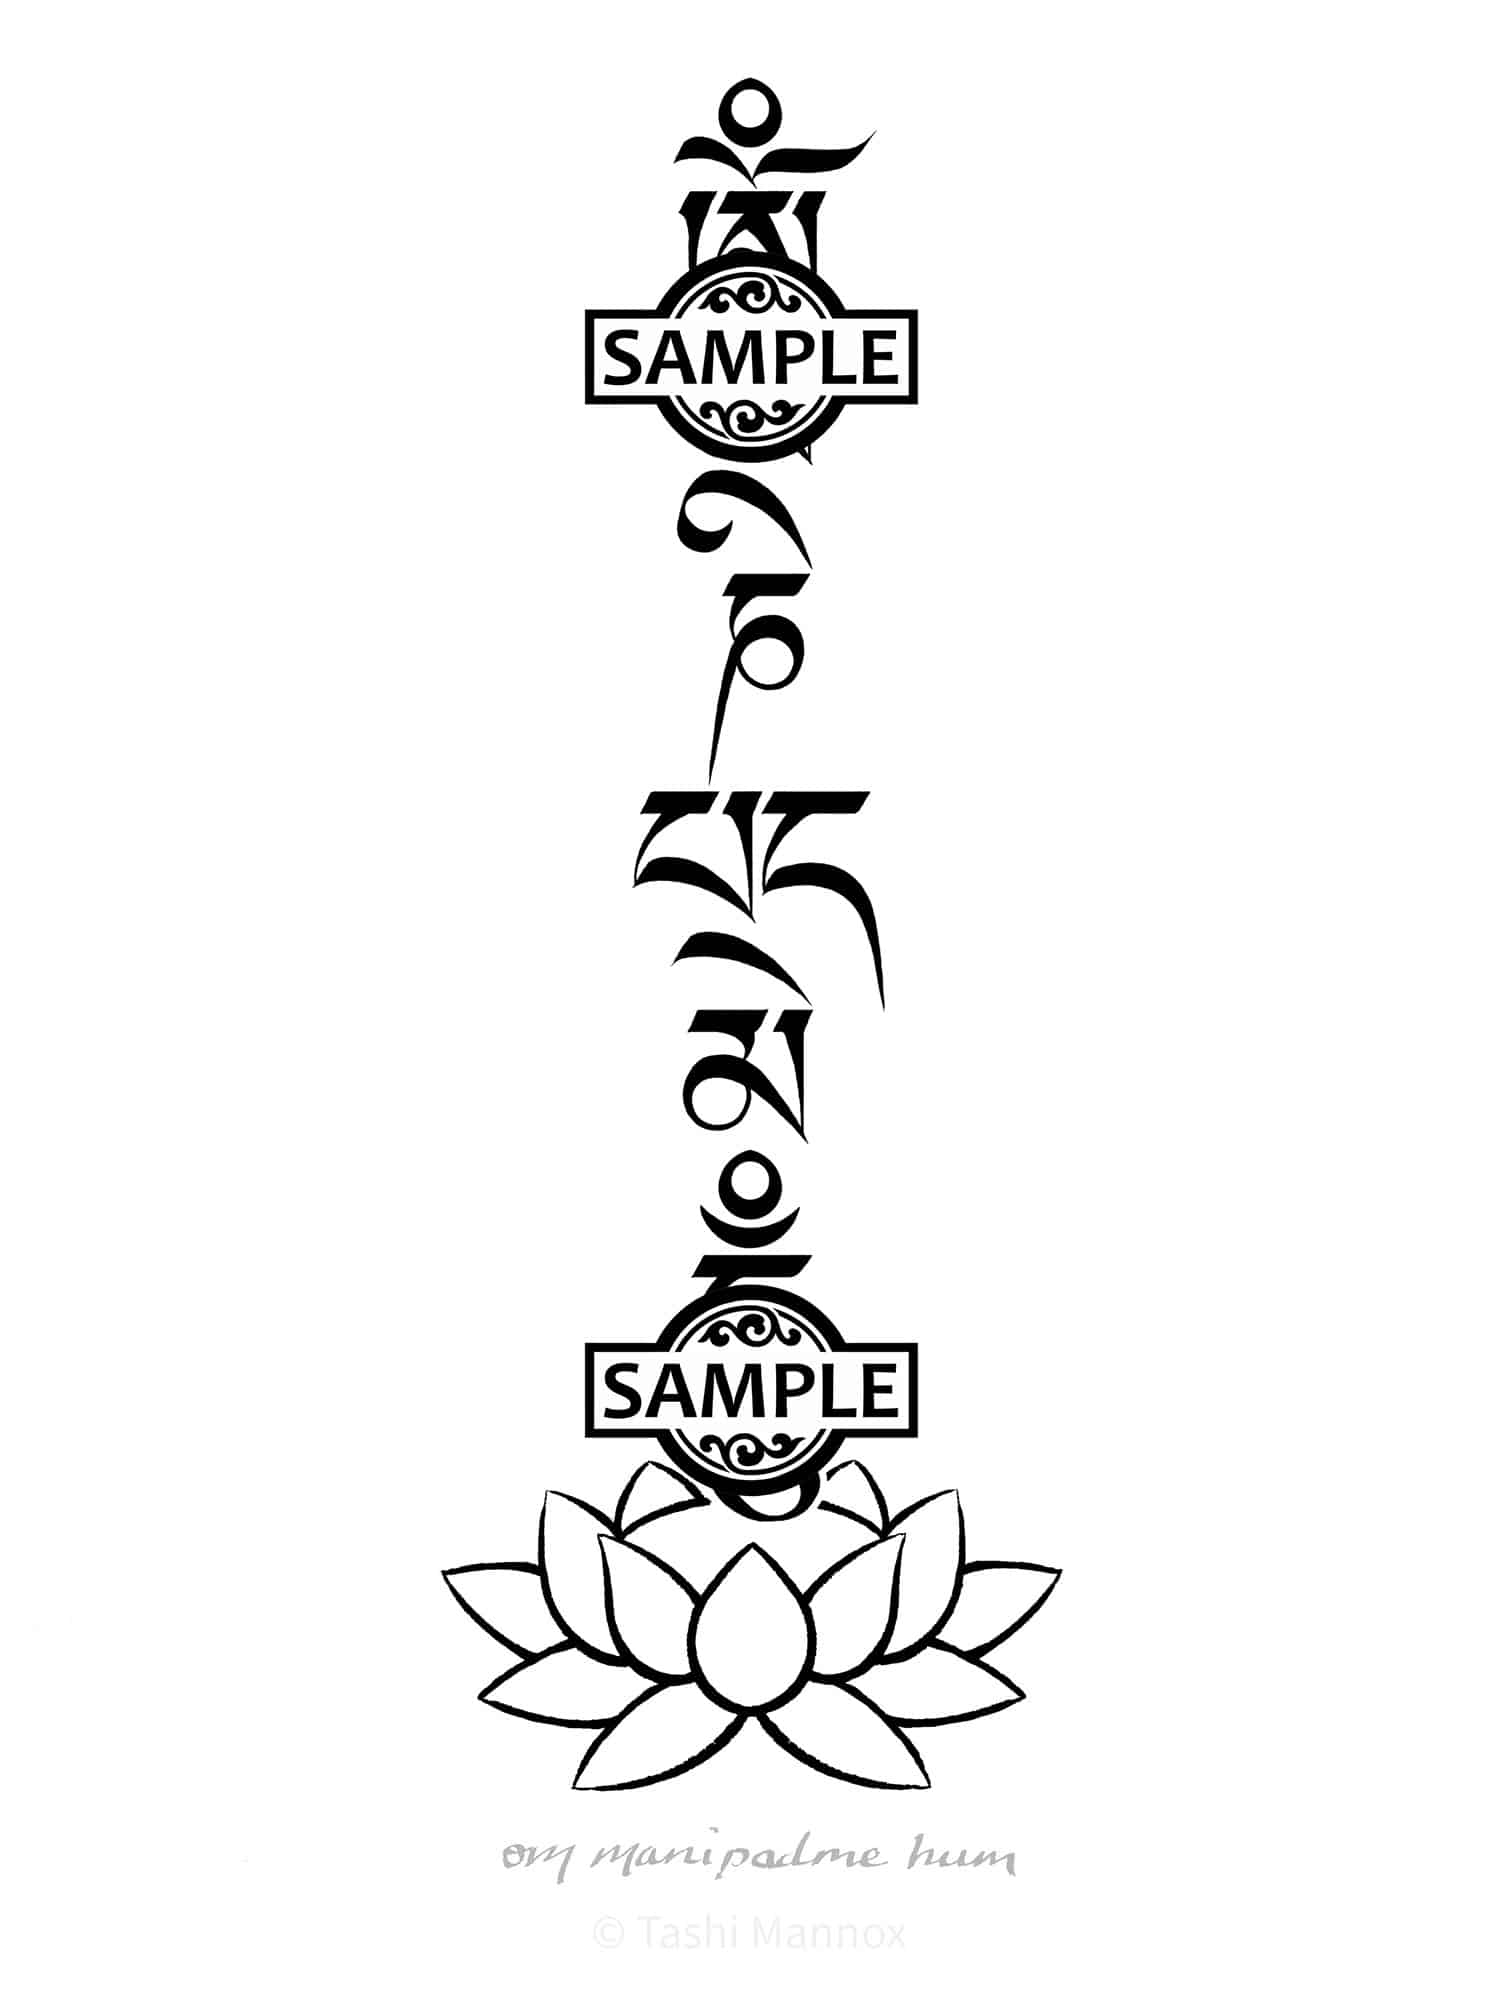 55 Om Mani Padme Hum Tattoos 2023 Buddhism designs with meanings   TattoosBoyGirl